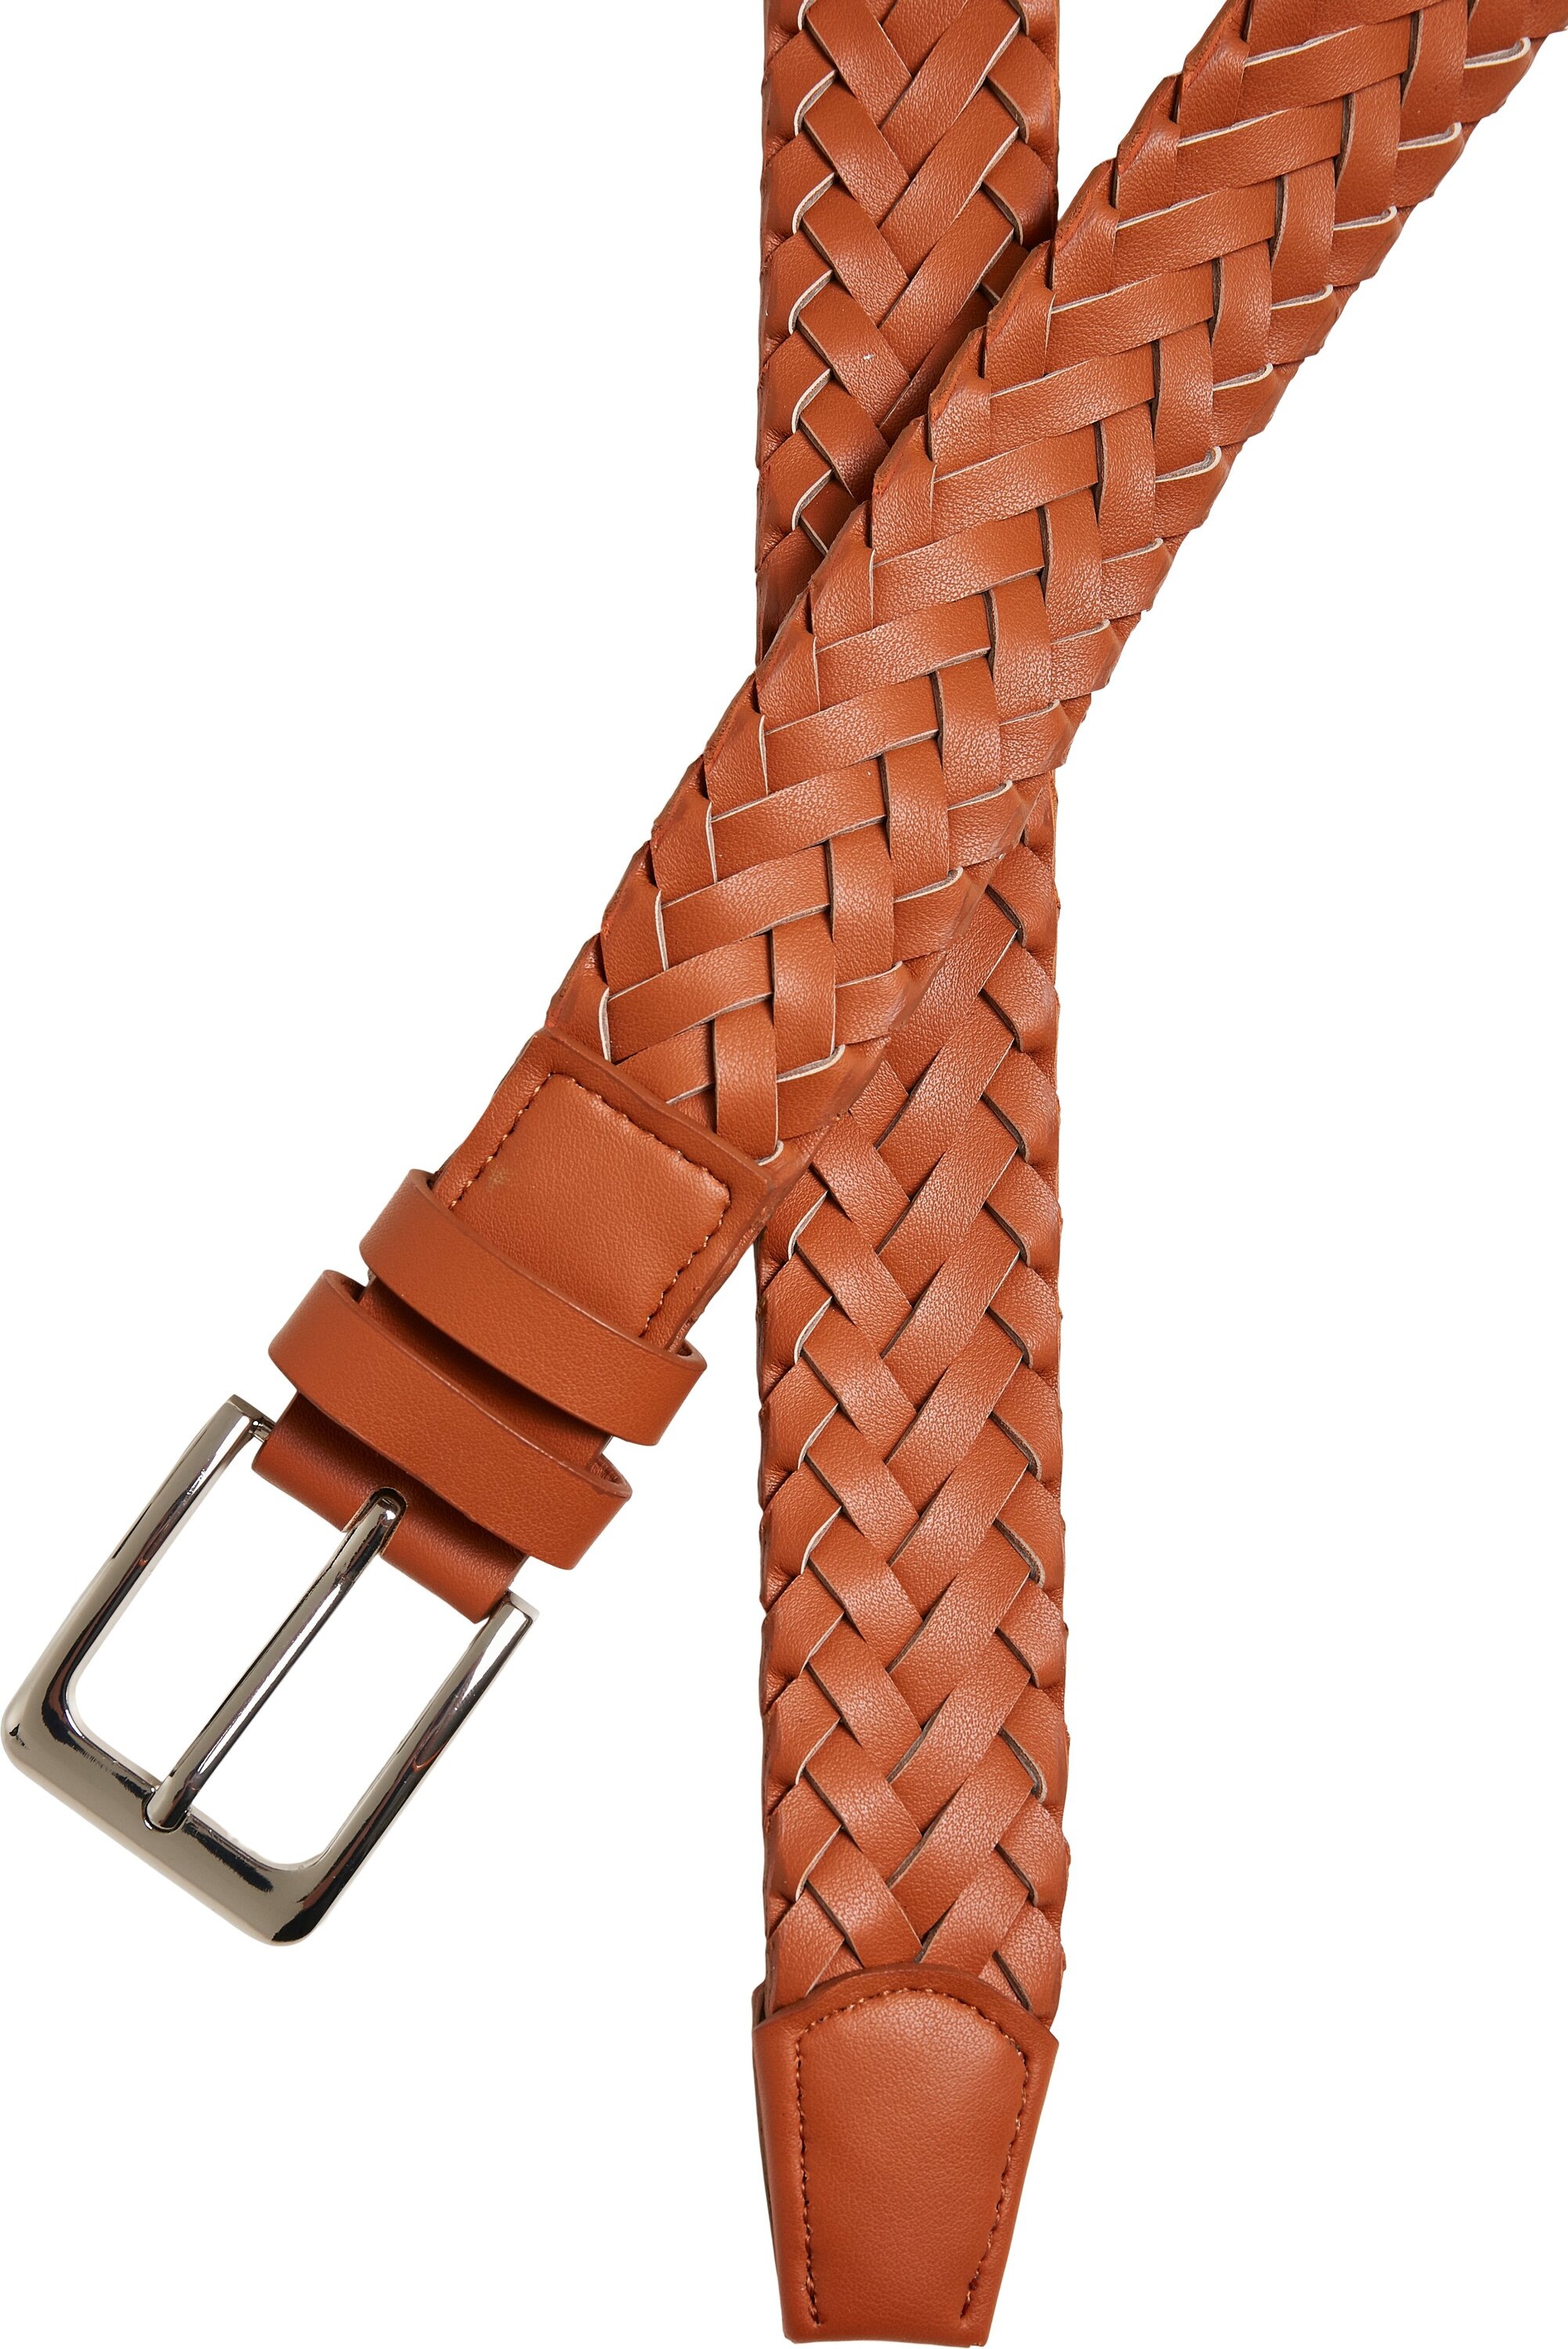 URBAN Belt« »Accessoires Hüftgürtel | Leather Synthetic für Braided bestellen CLASSICS BAUR